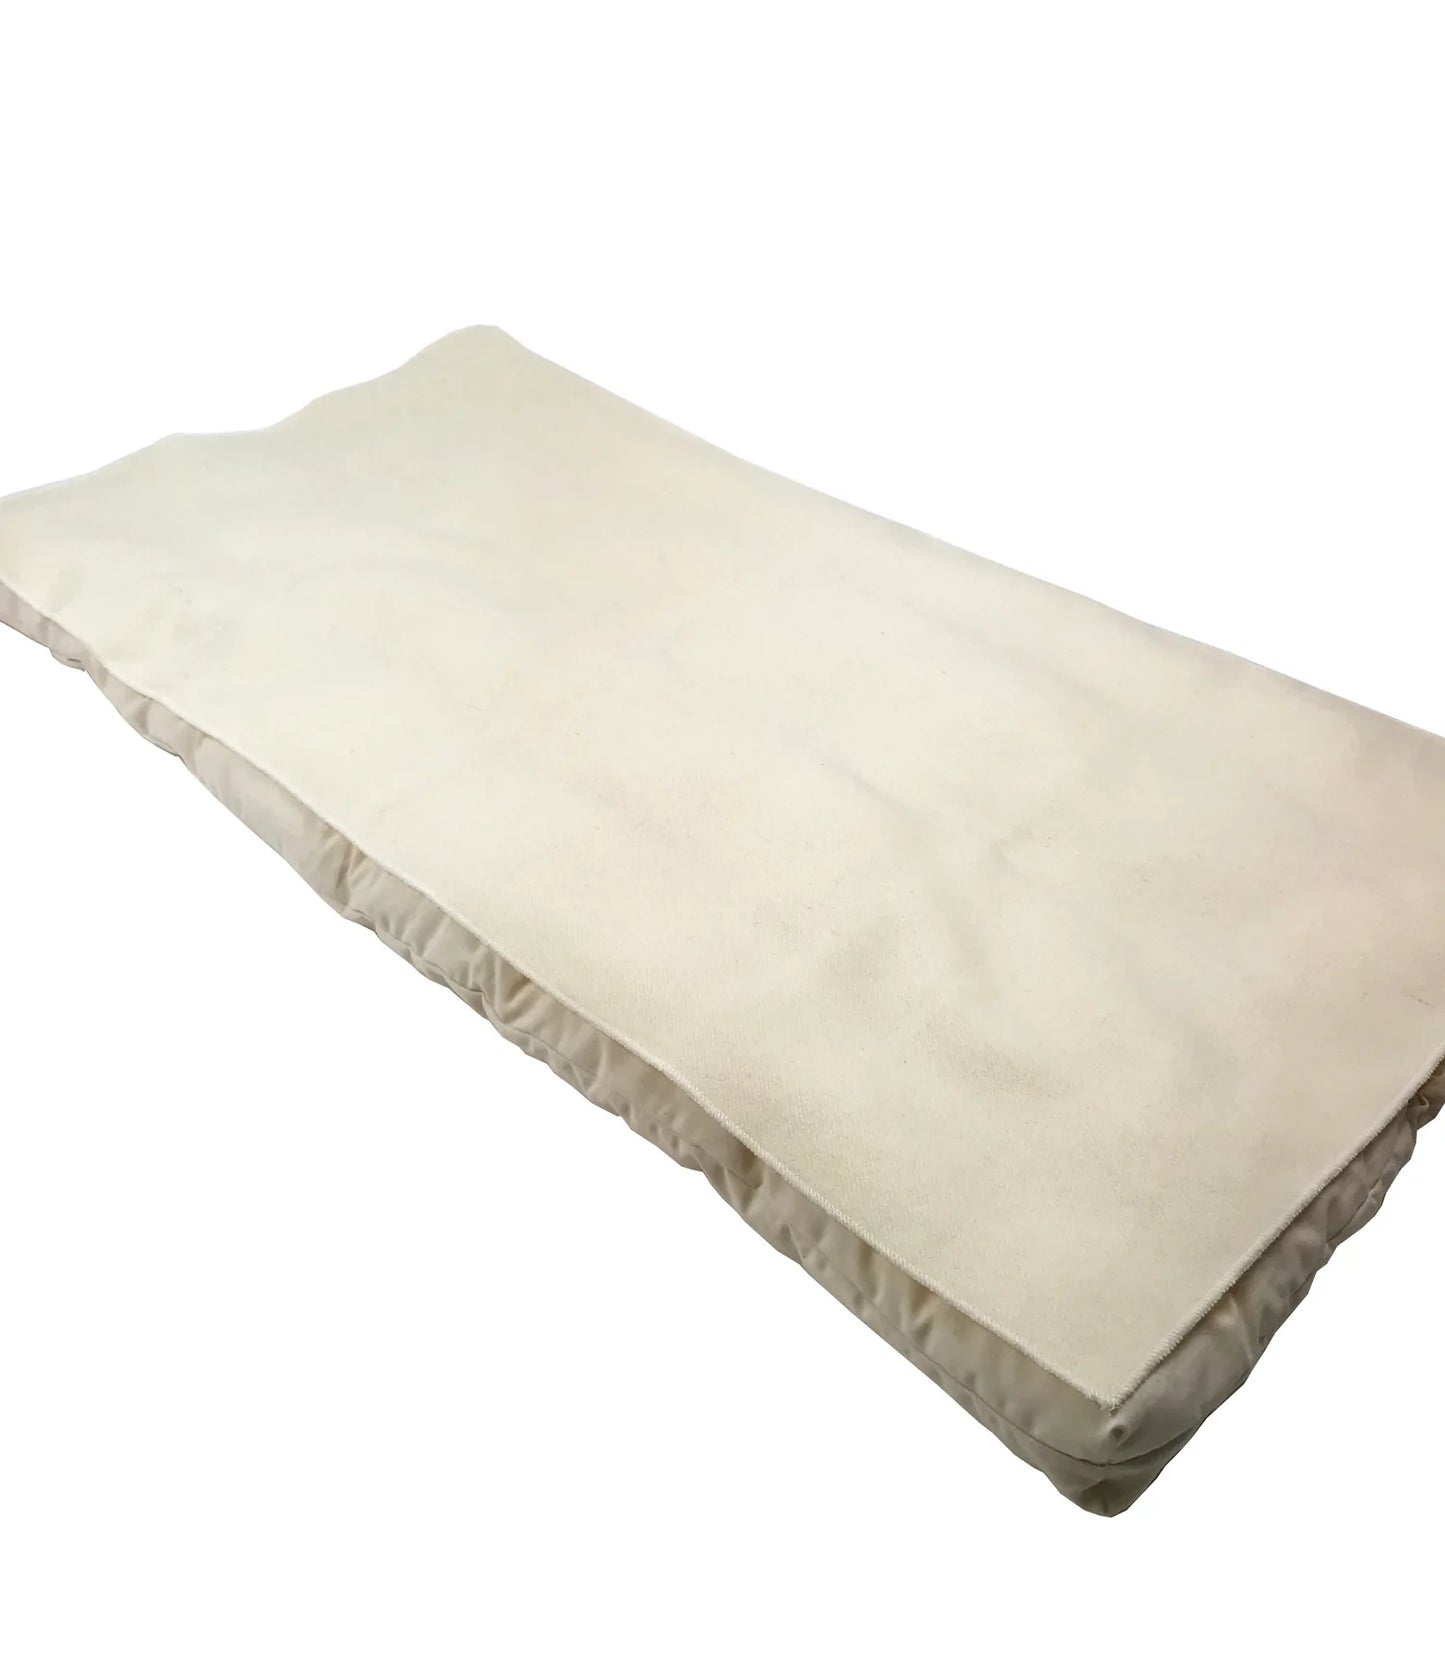 Wool Puddle Pad - Organic Cotton Futon Mattress Protector